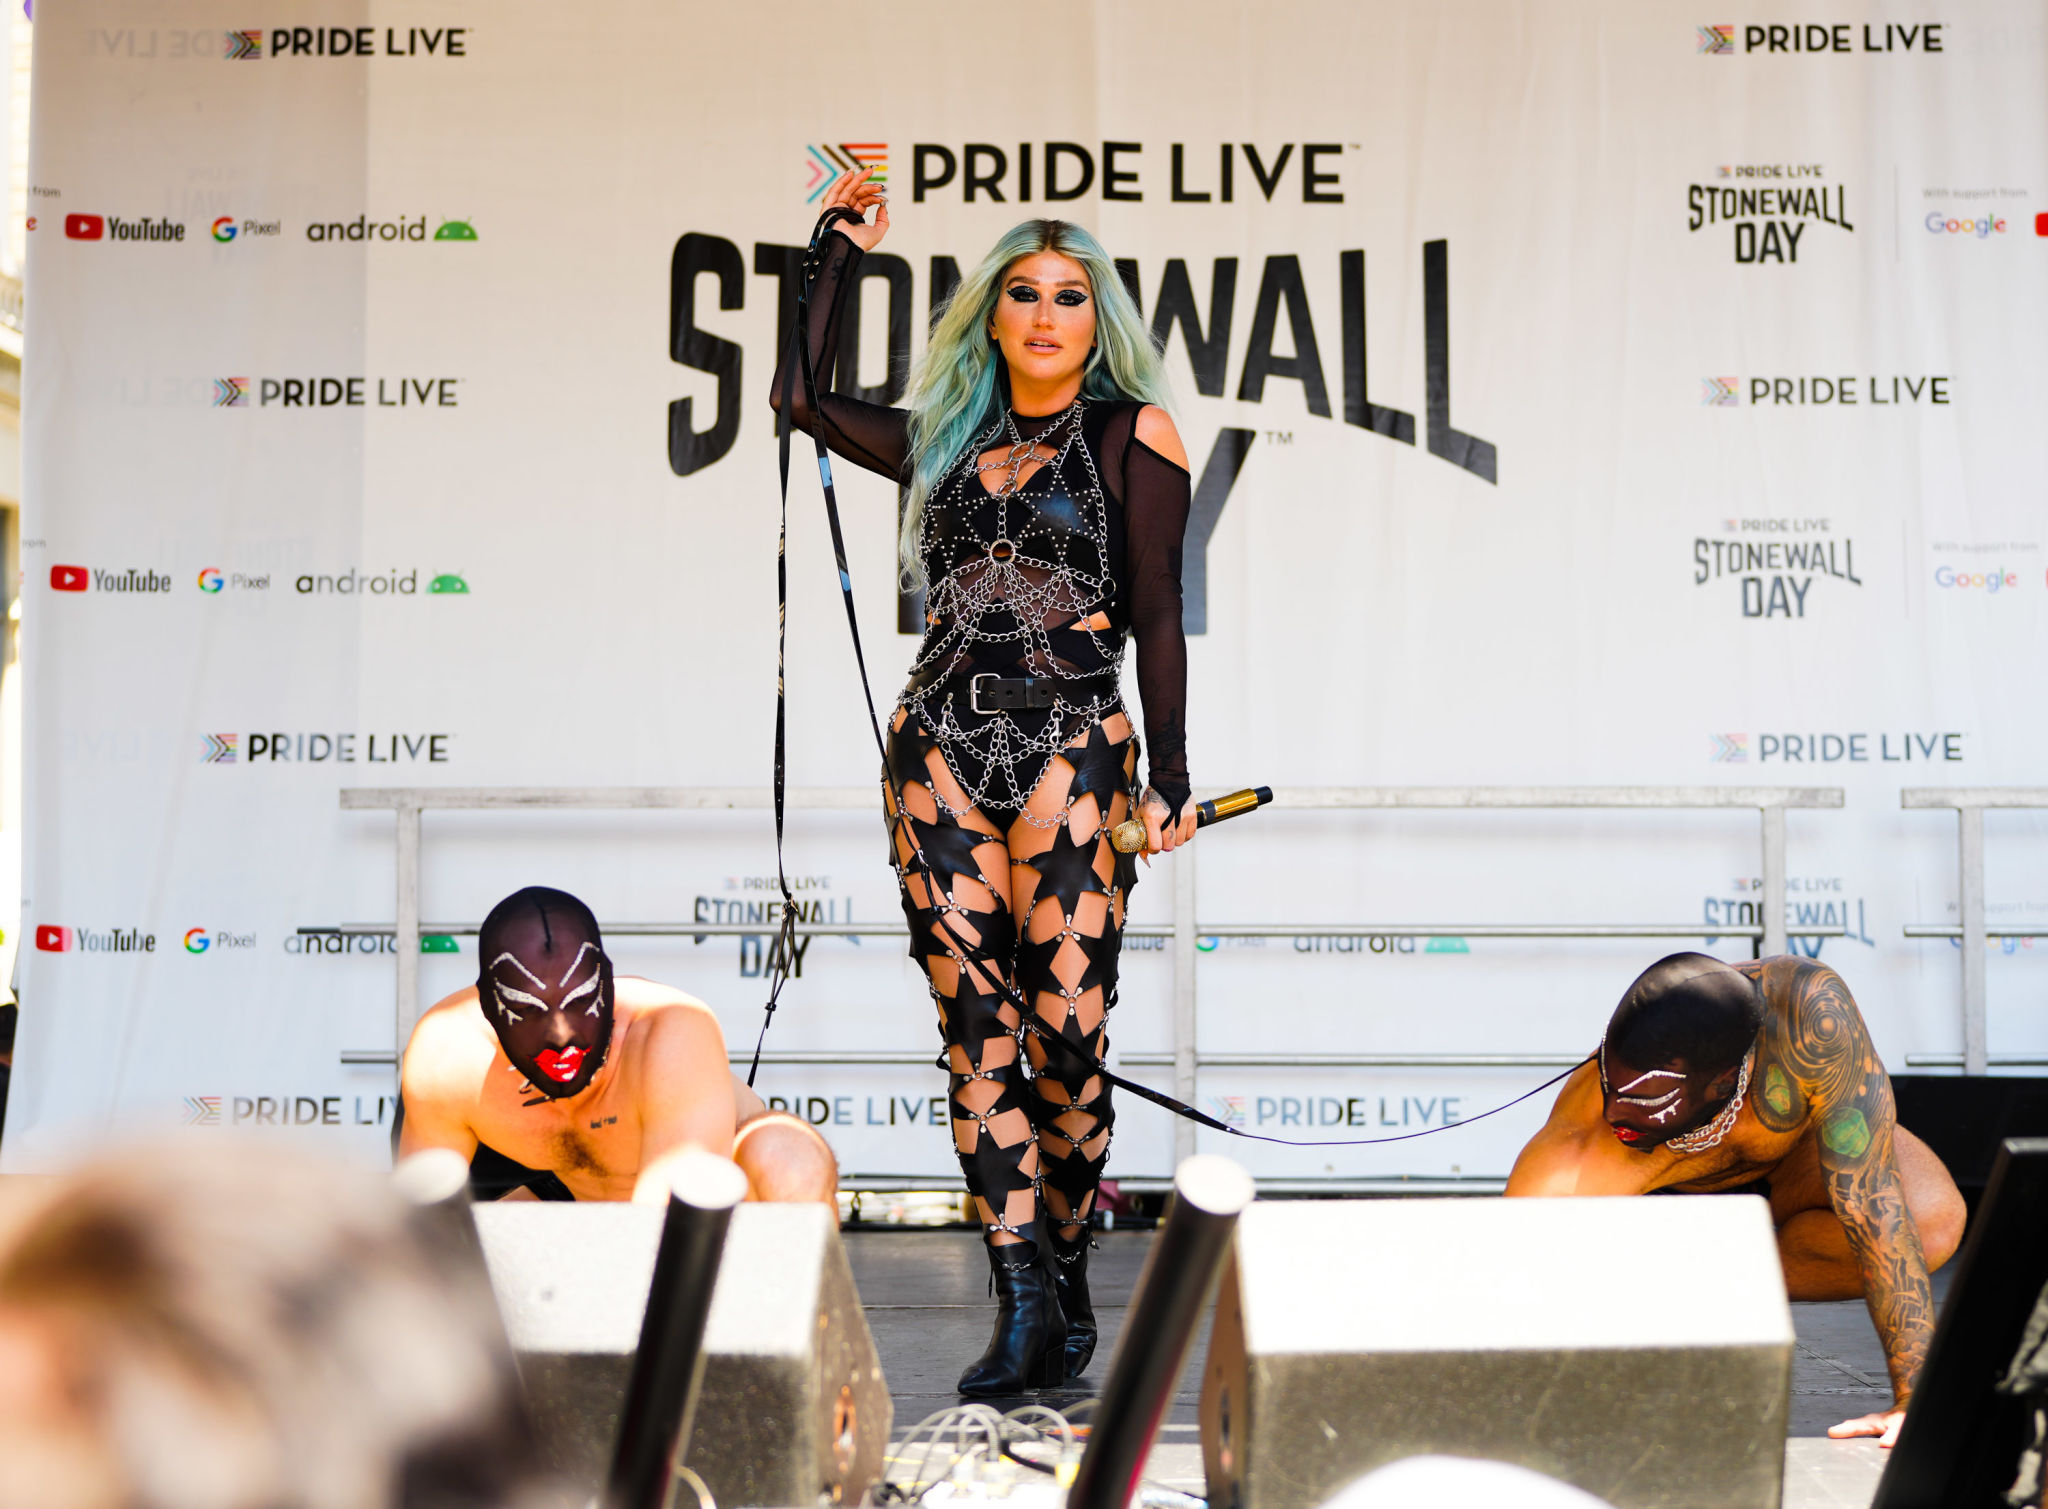 kesha-Pride-Live-Stonewall-Day-27.jpg